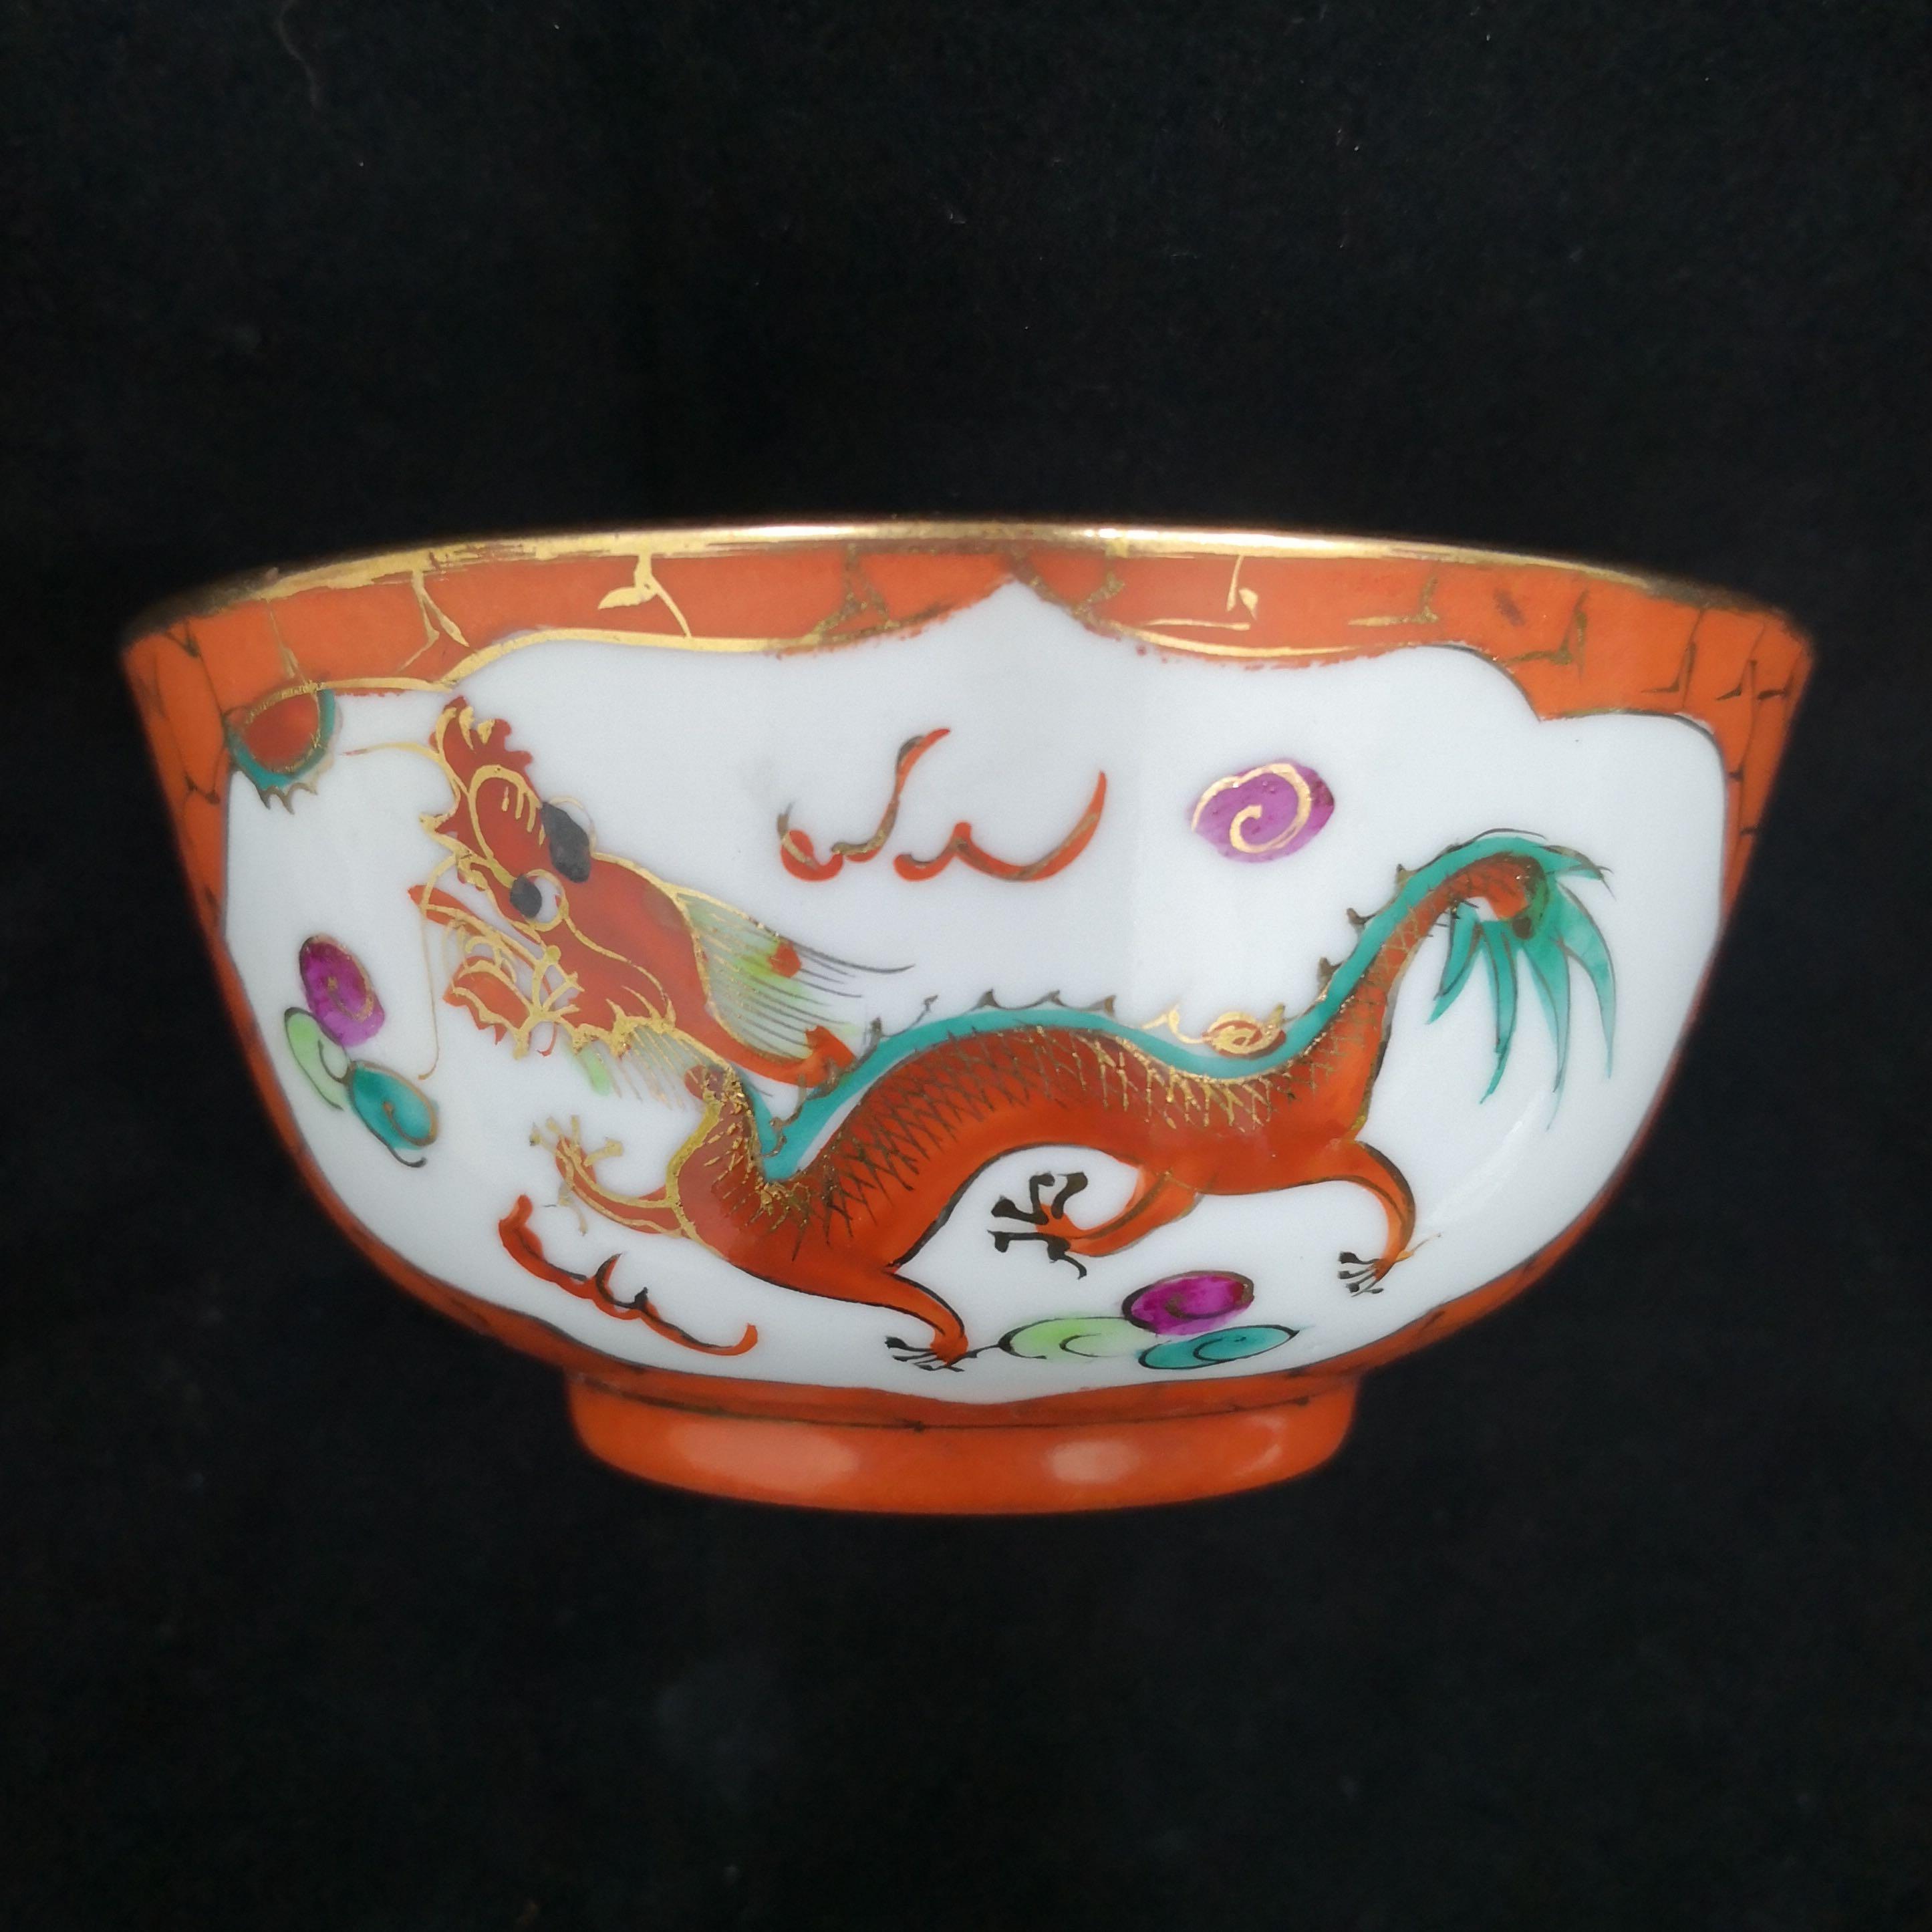 Old Jiang Xi Famous Porcelain Jing De Zhen Coral Red Gold Lining Dragon  Phoenix Bowl 早期江西名瓷景德镇珊瑚红开窗龙凤描金碗